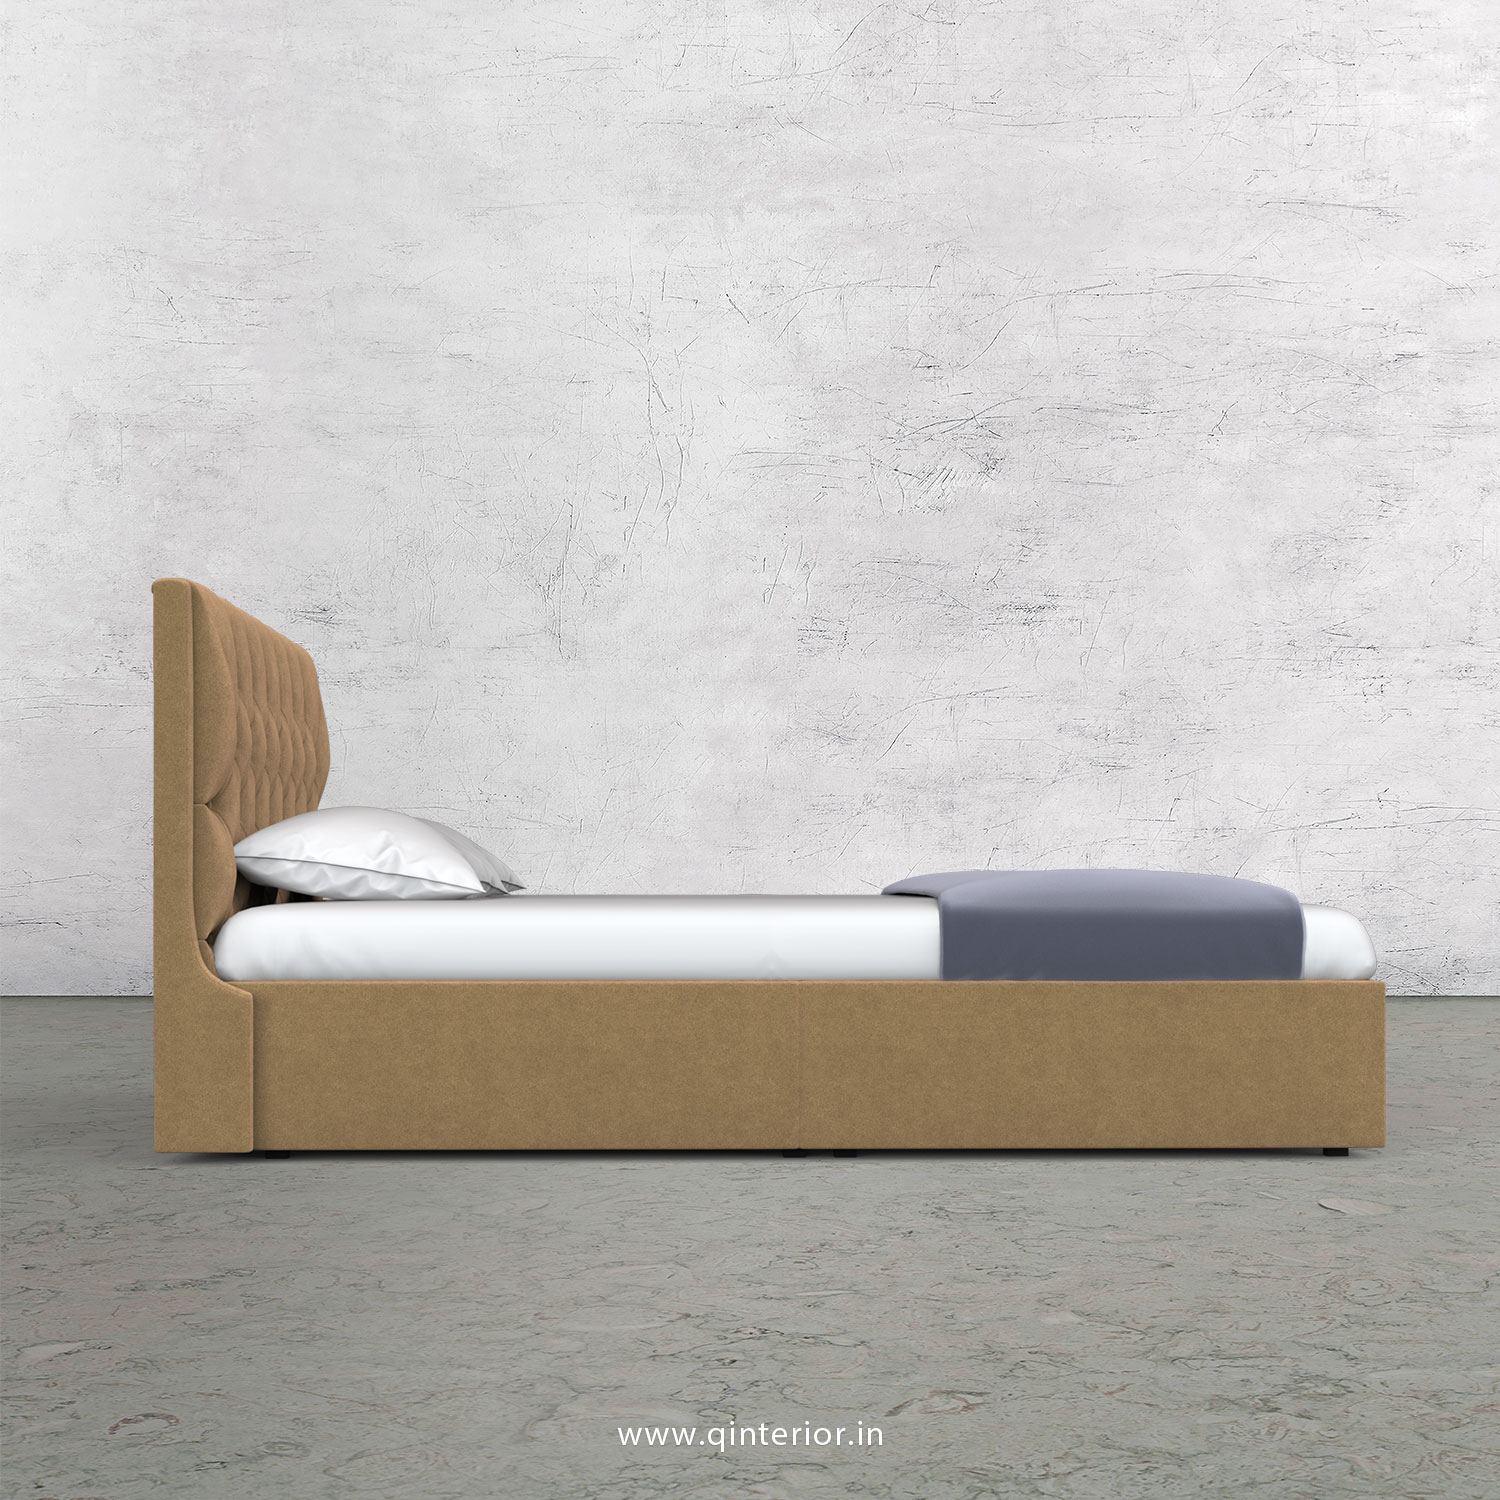 Scorpius King Size Storage Bed in Velvet Fabric - KBD001 VL09